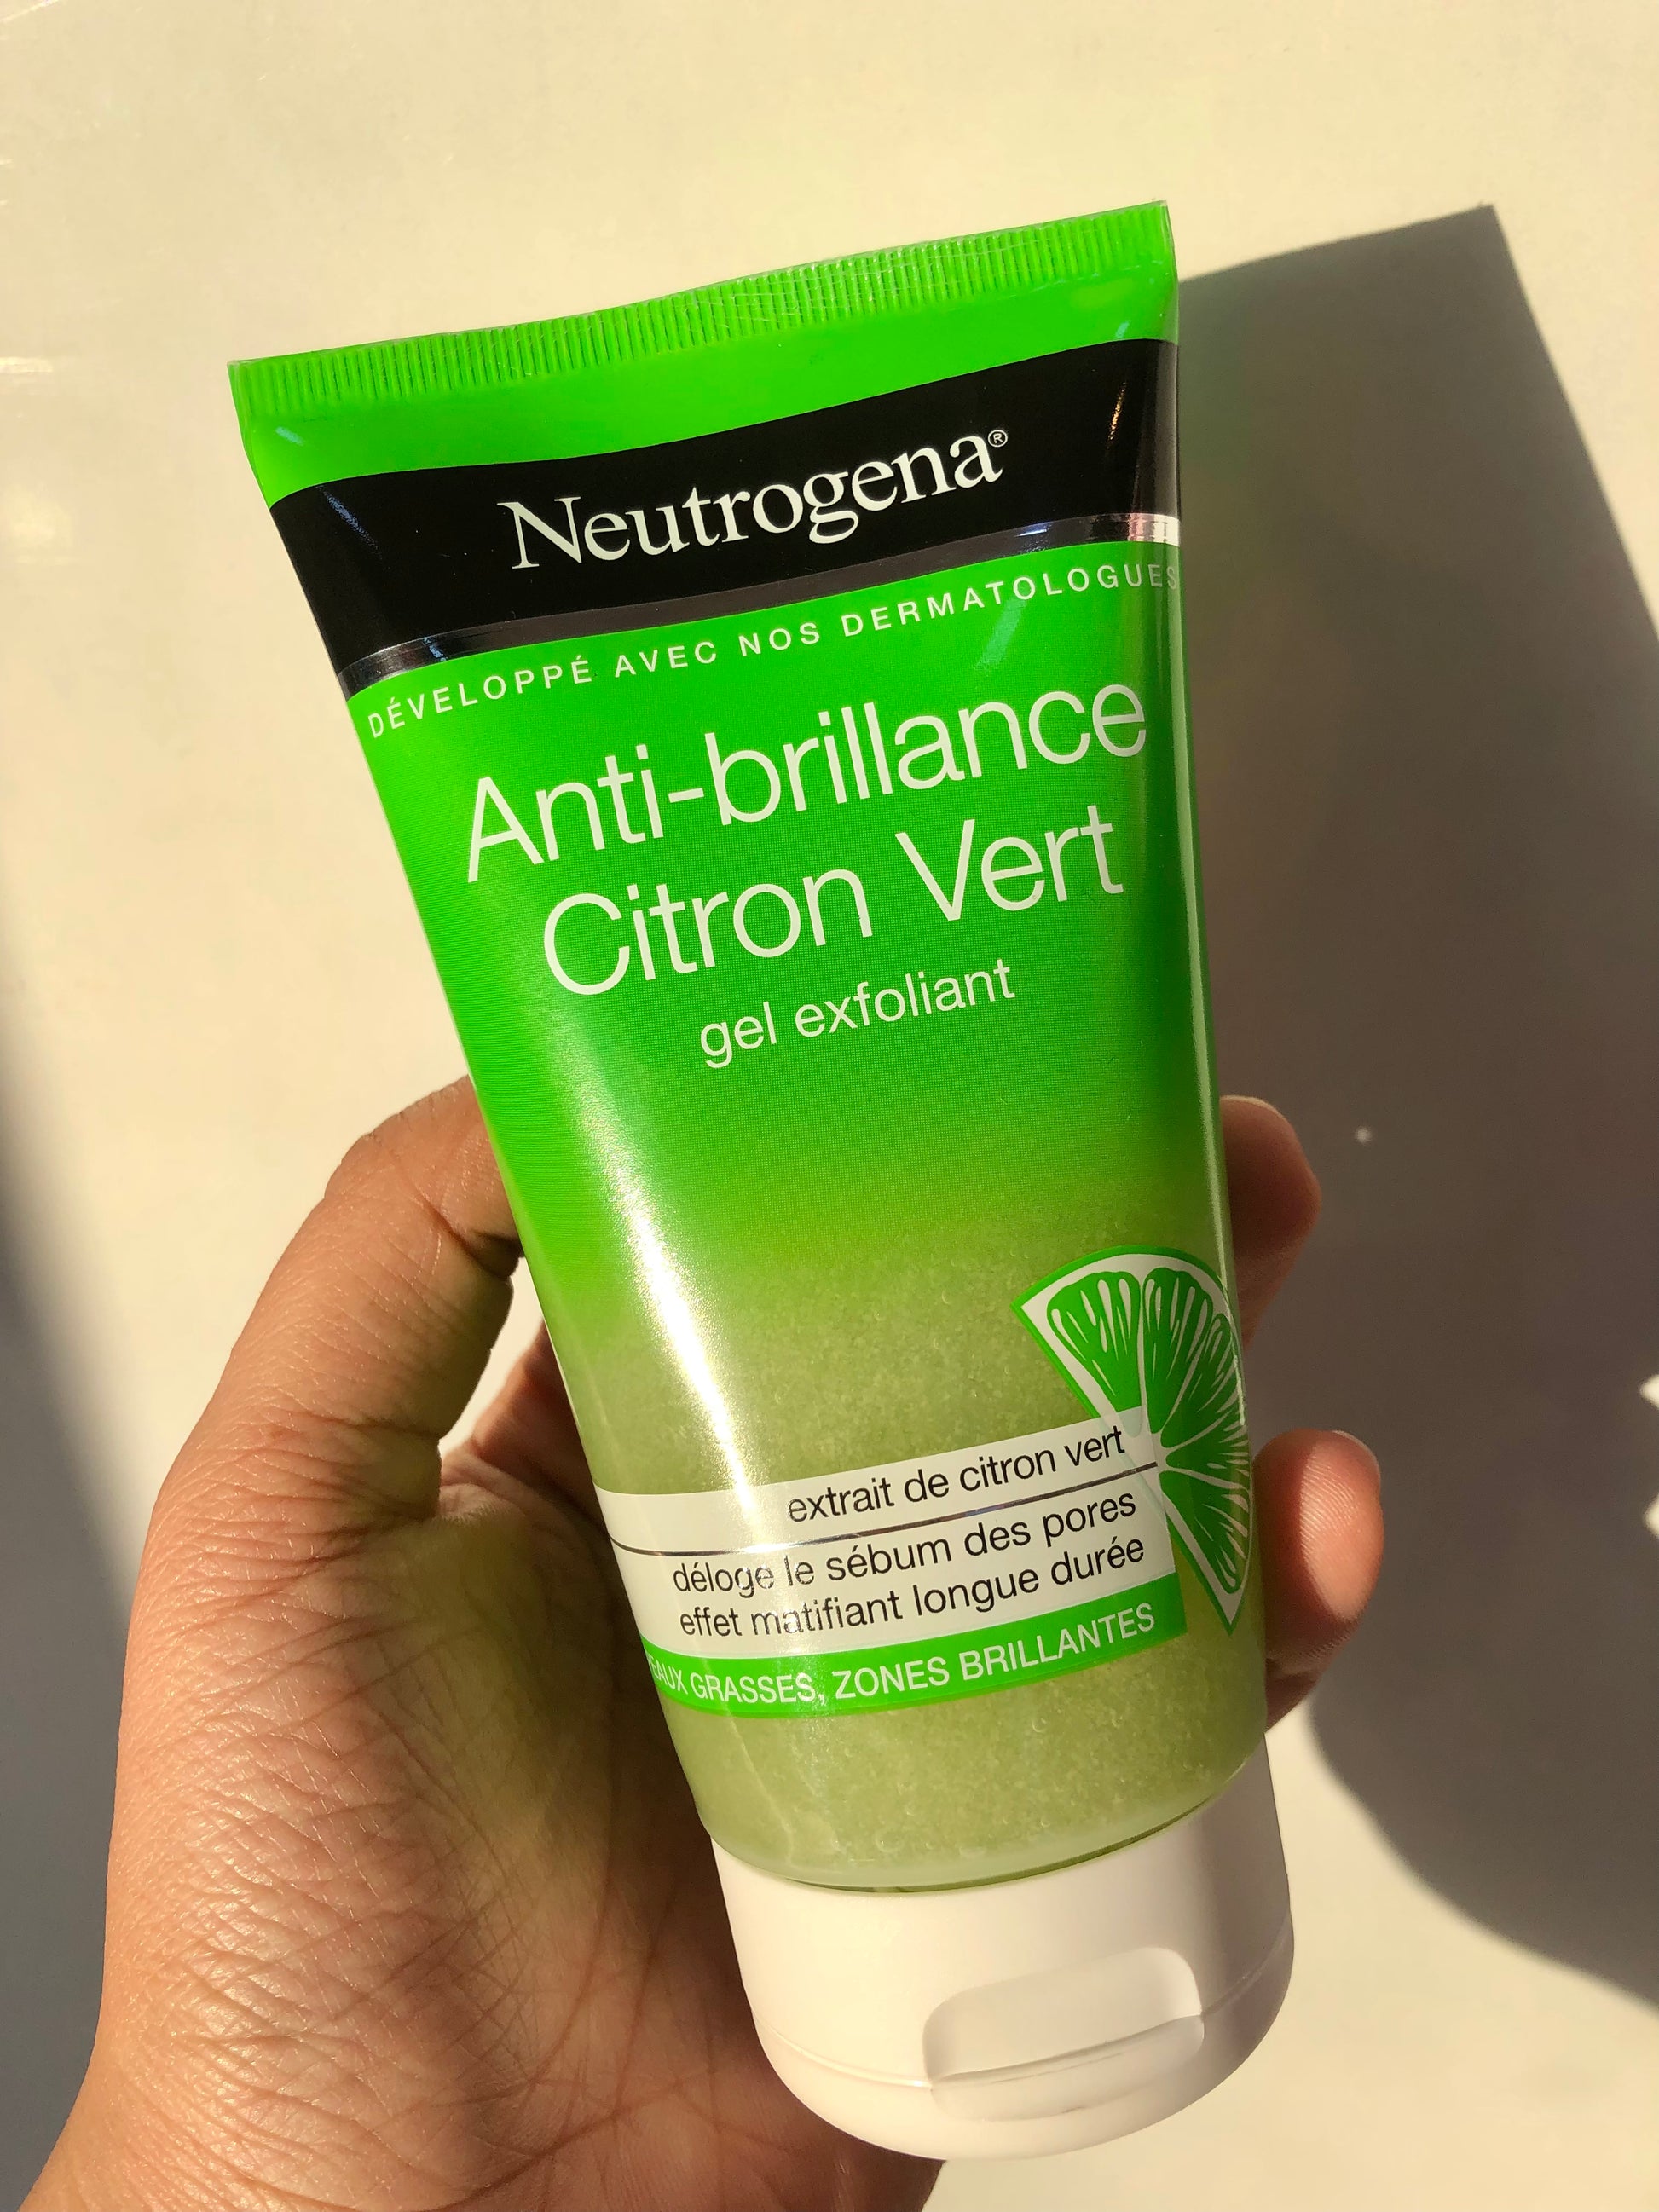 Neutrogena Anti-brillance Citron Vert : gel exfoliant 150ml